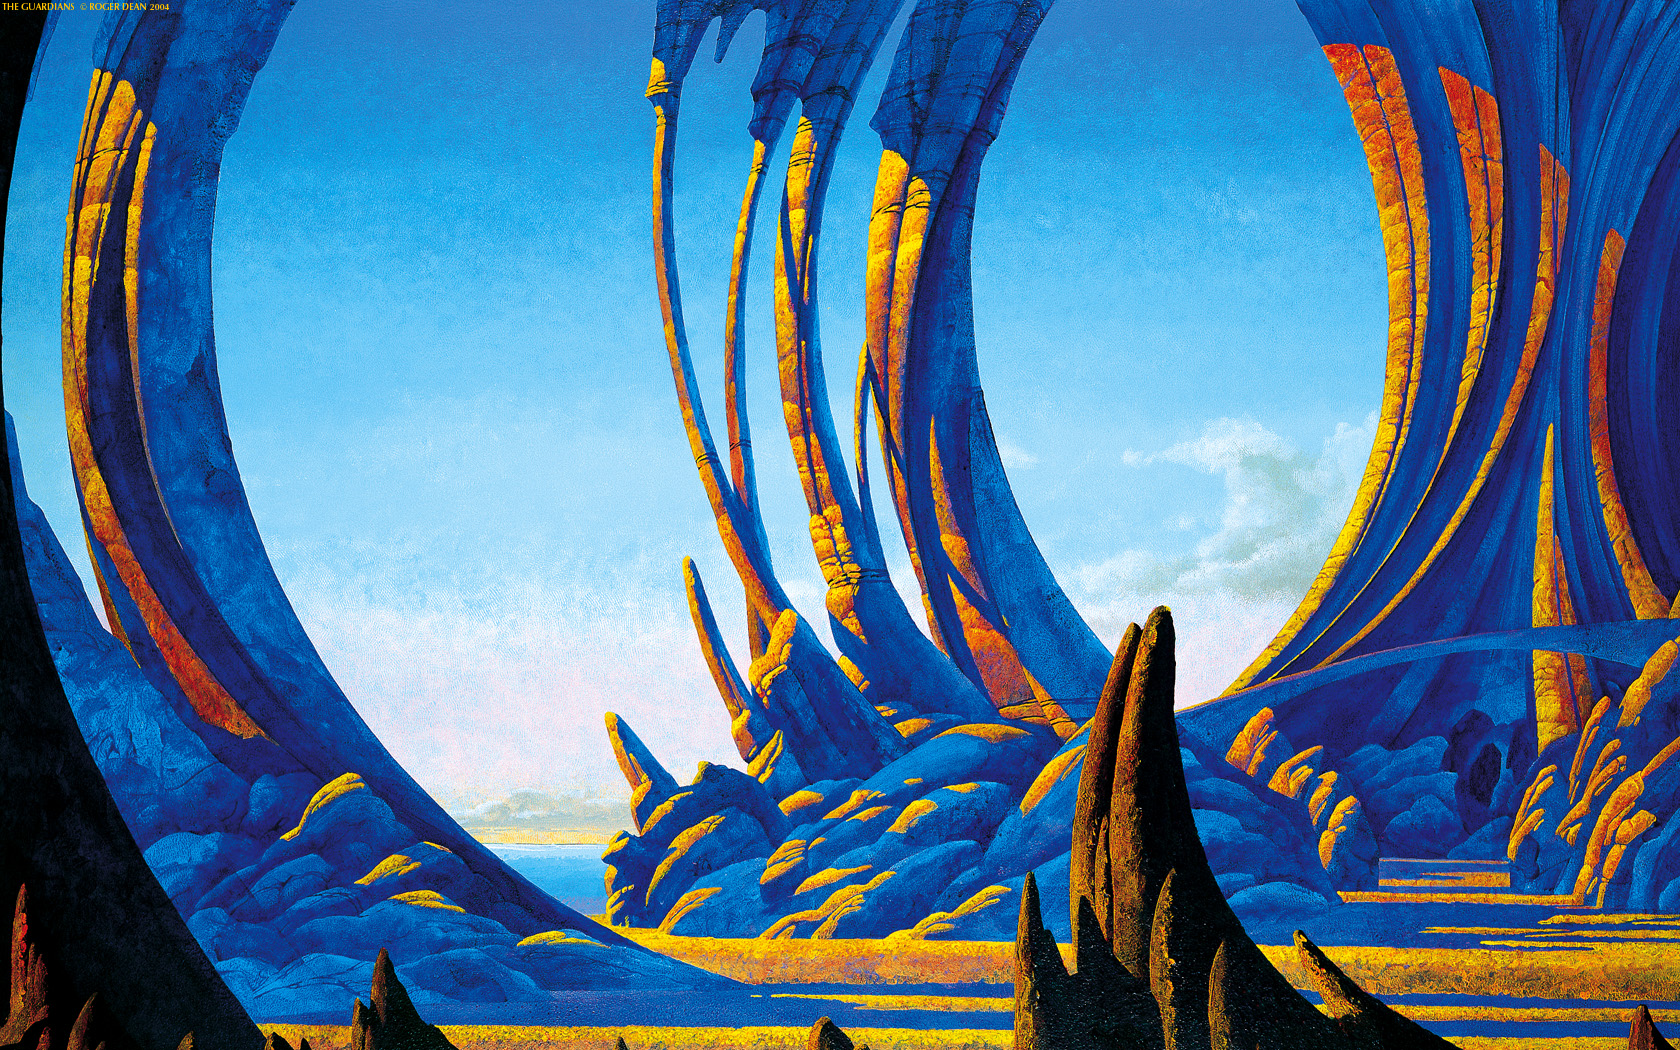 General 1680x1050 Roger Dean Yes artwork progressive rock album covers fantasy art landscape alien world rock formation